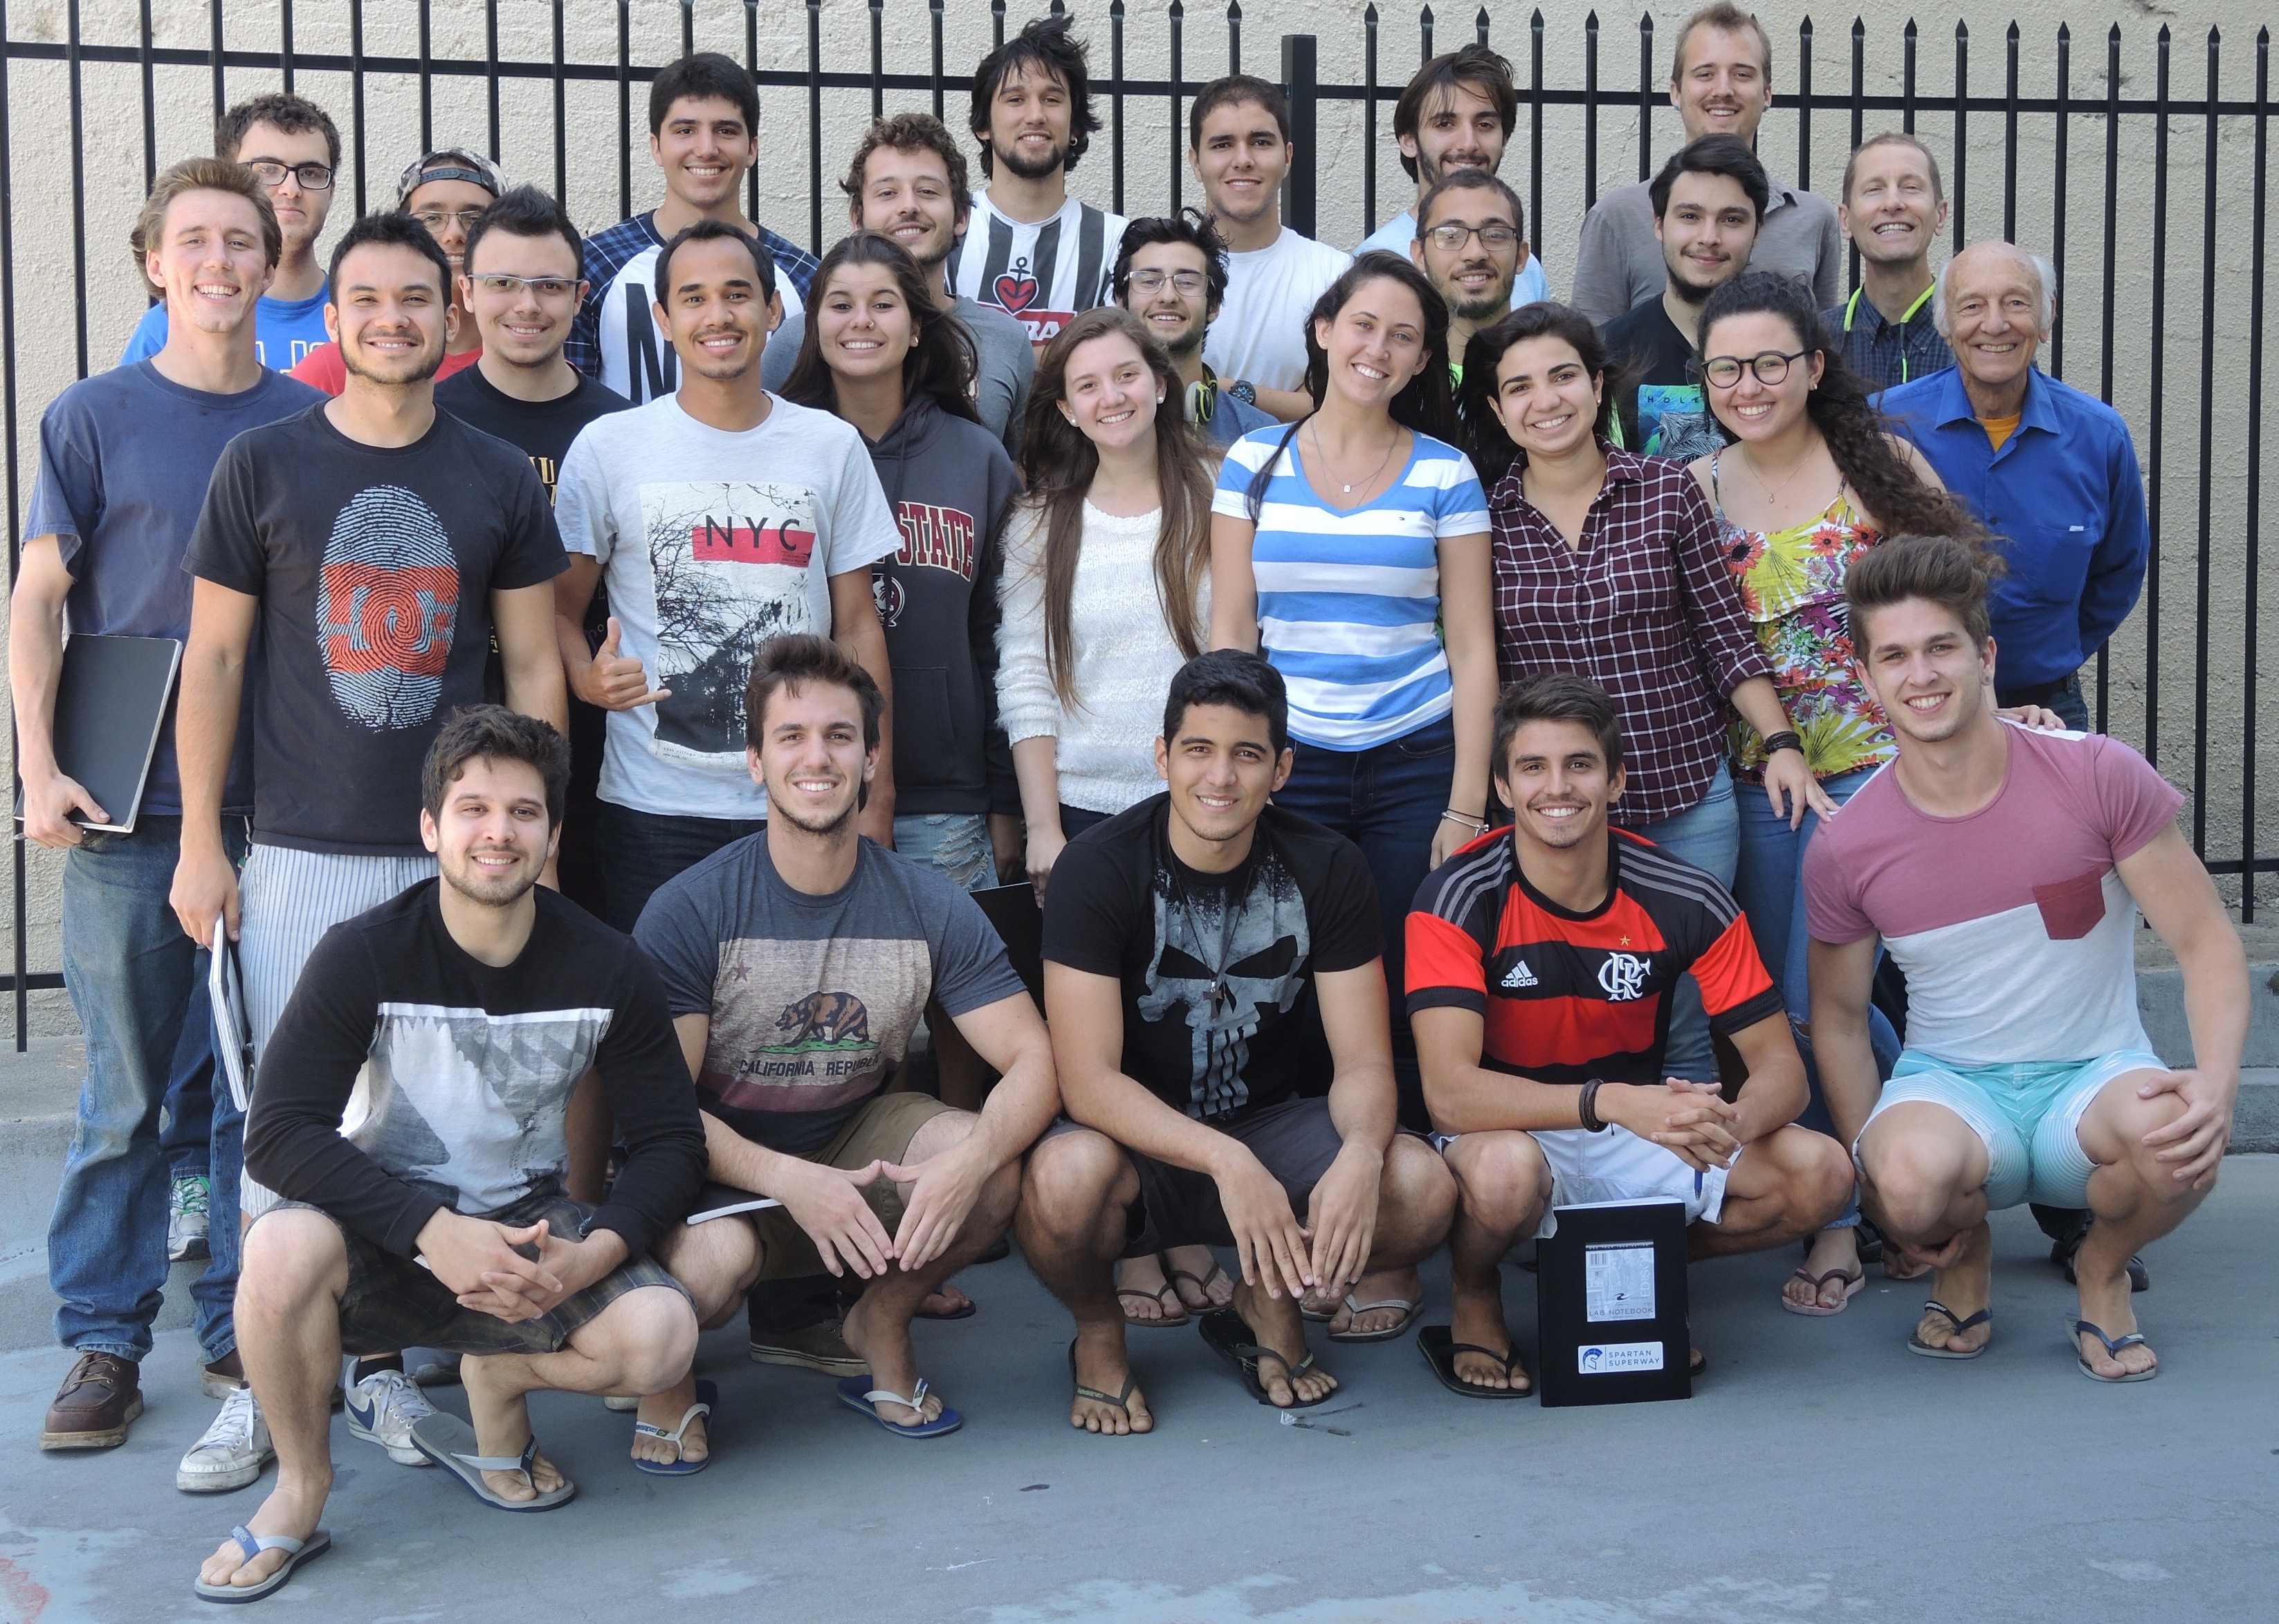 2016 Summer International Students SMSSV Team